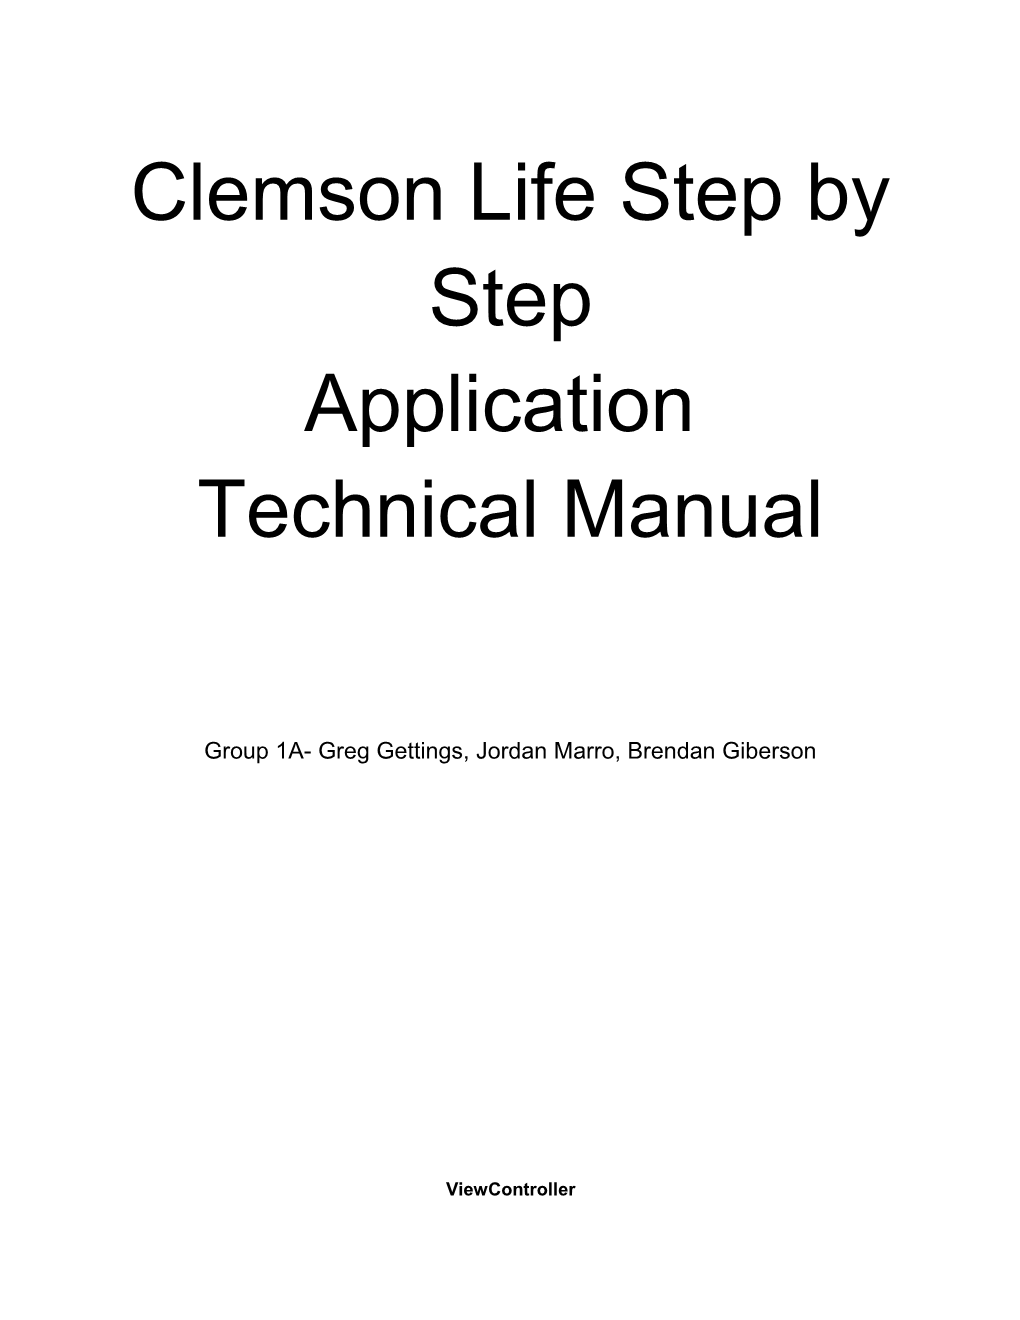 Clemson Life Step by Step